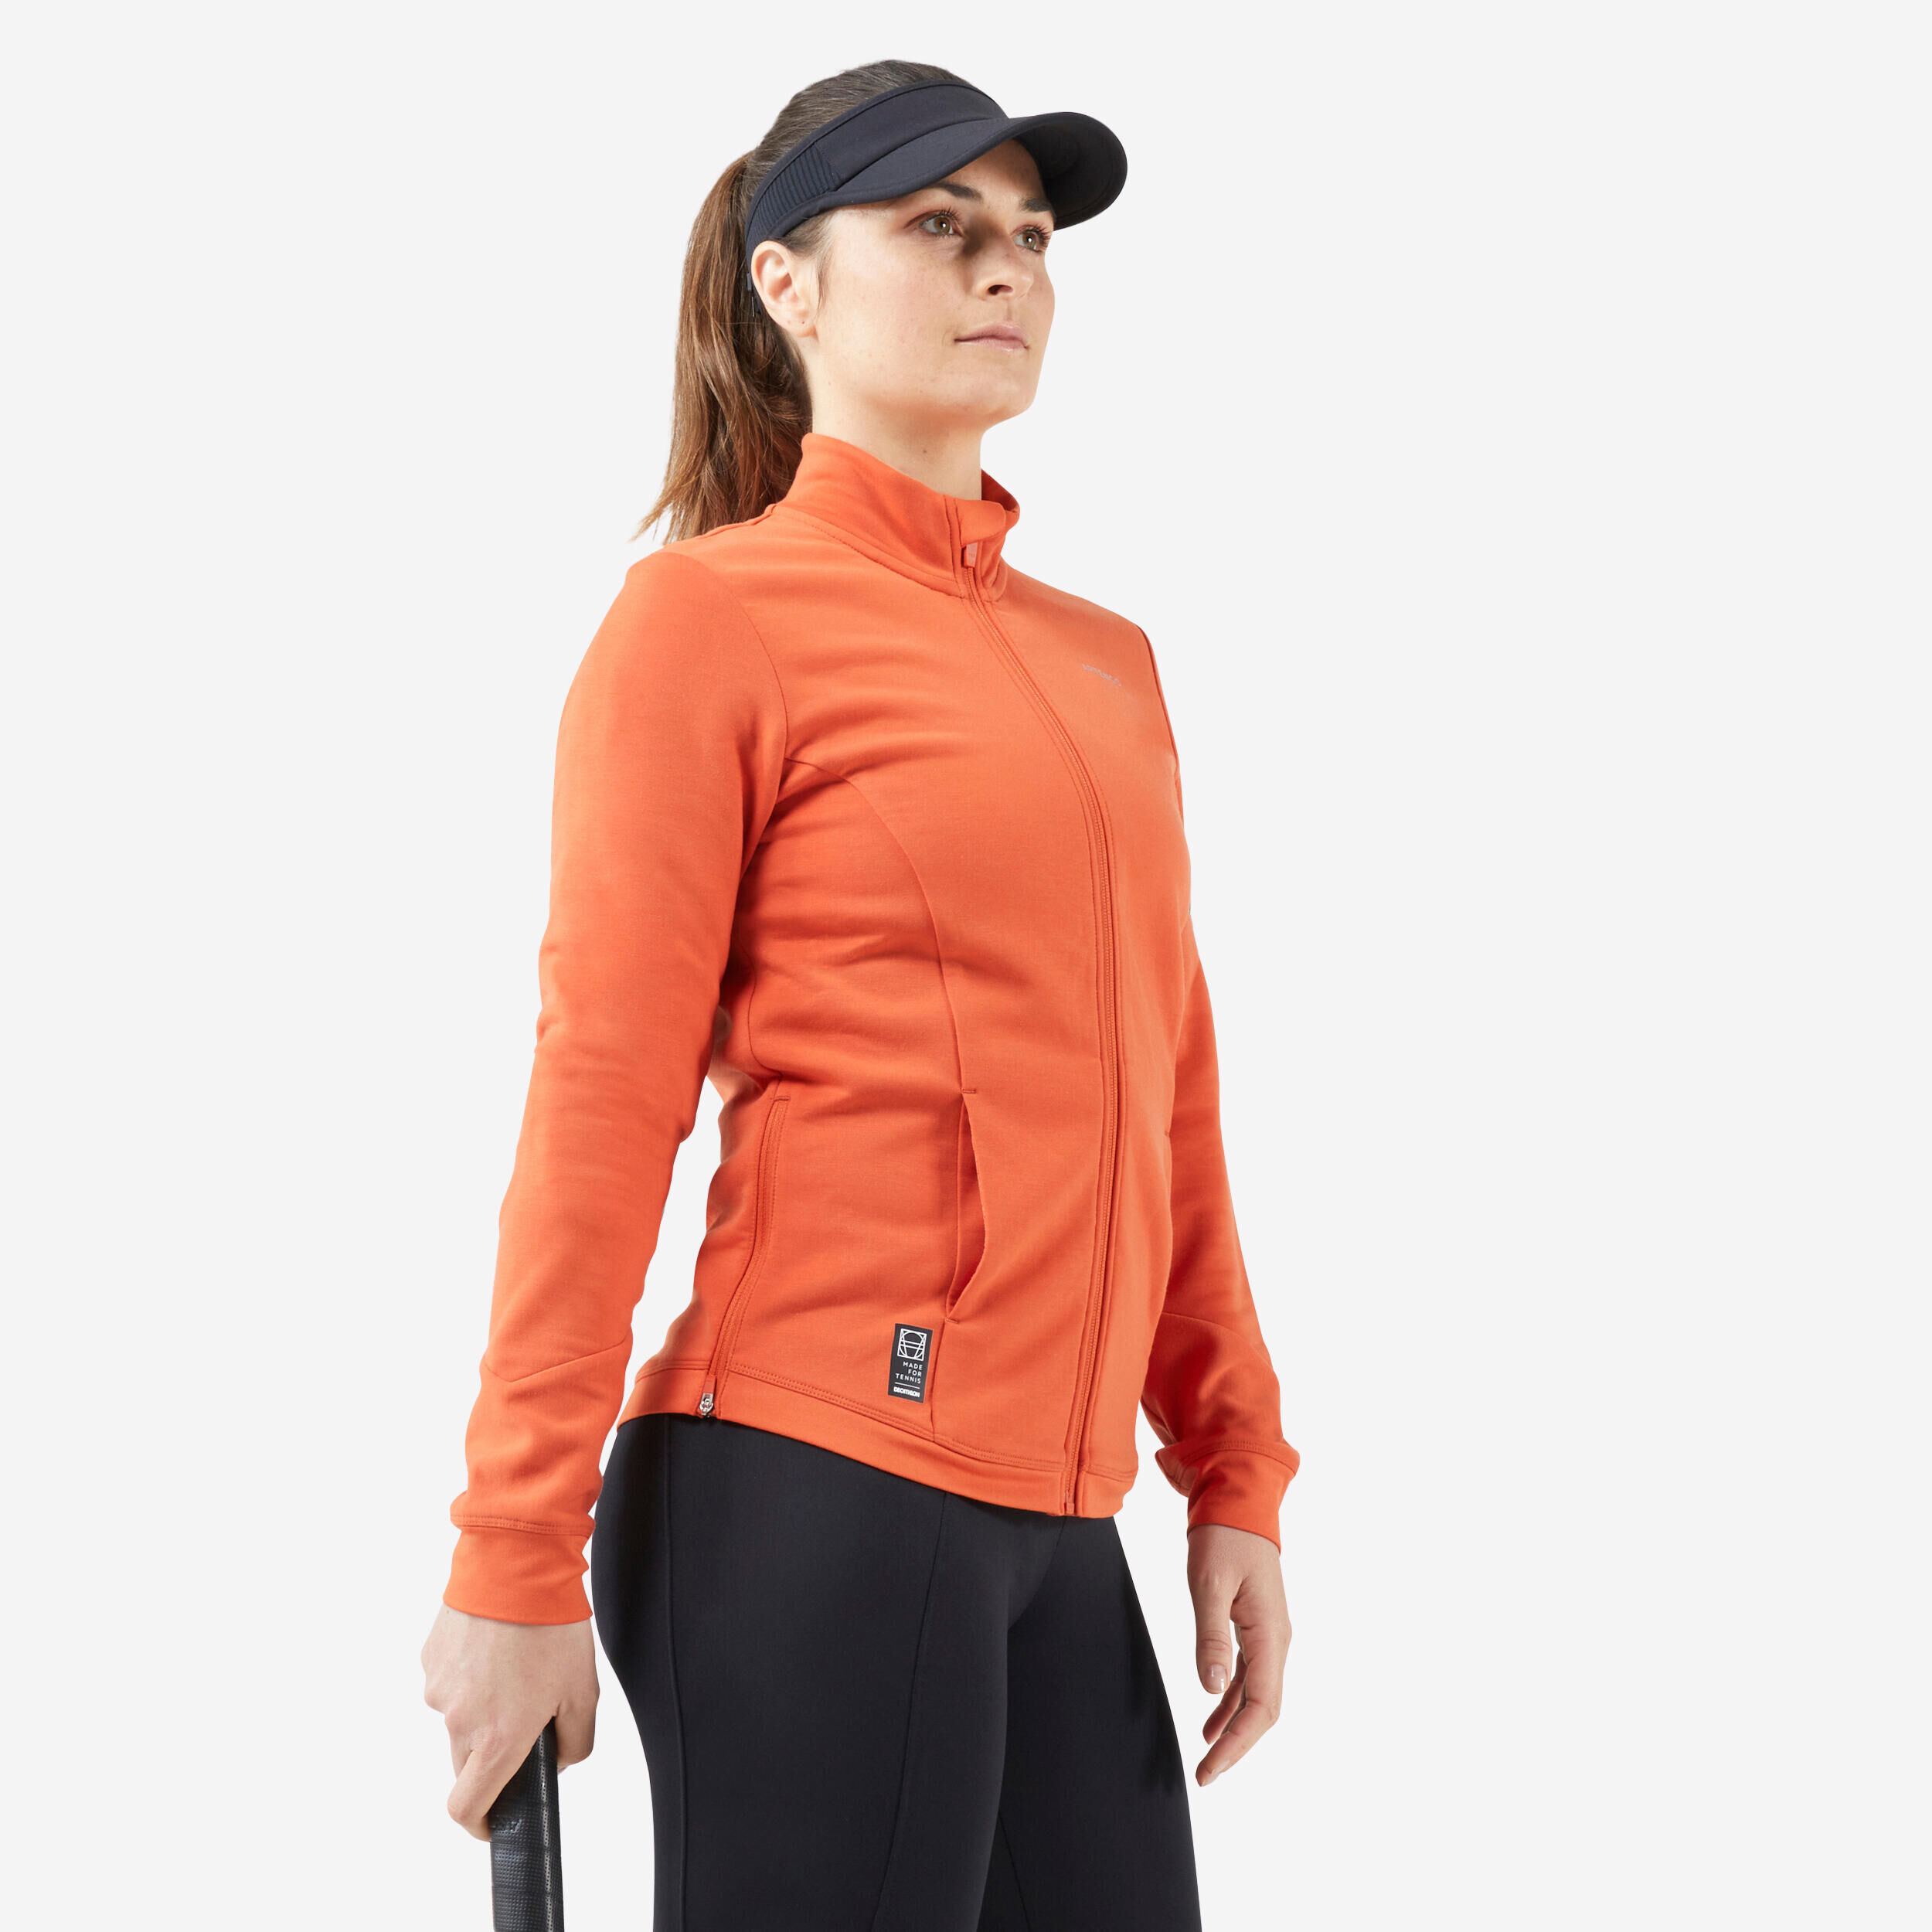 ARTENGO Women's Tennis Quick-Dry Soft Jacket Dry 900 - Orange